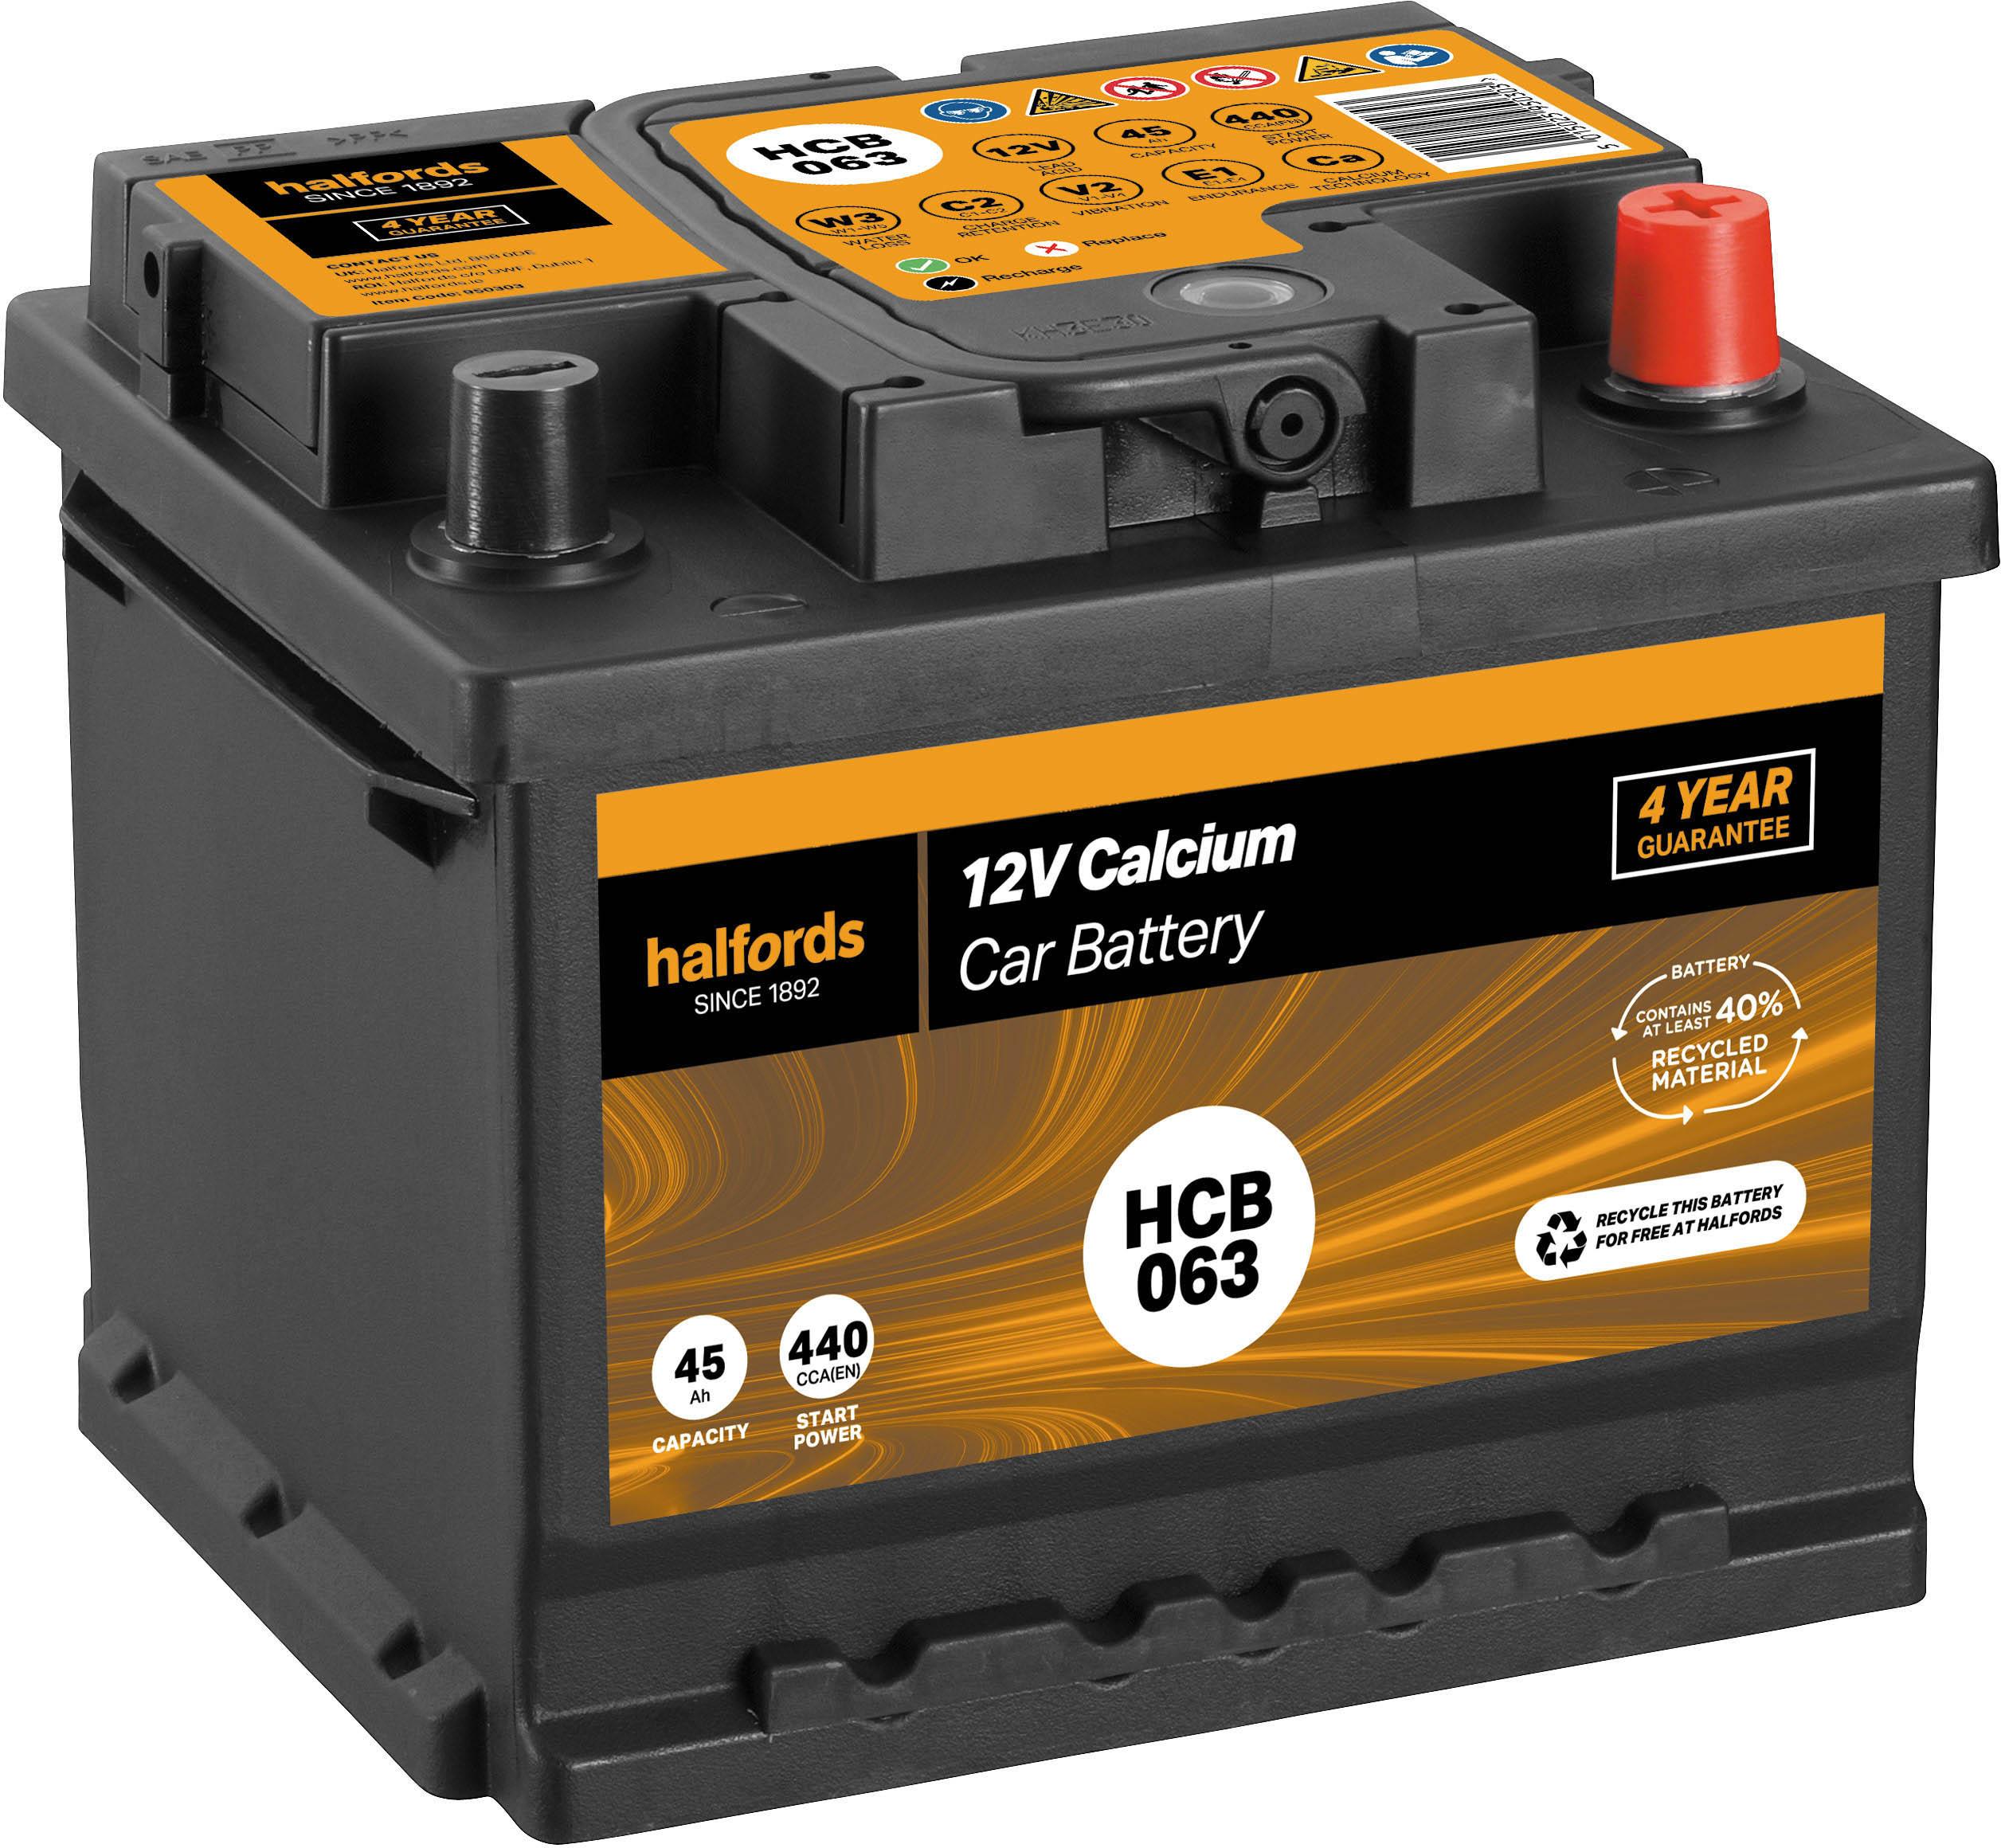 Halfords Hcb063 Calcium 12V Car Battery 4 Year Guarantee